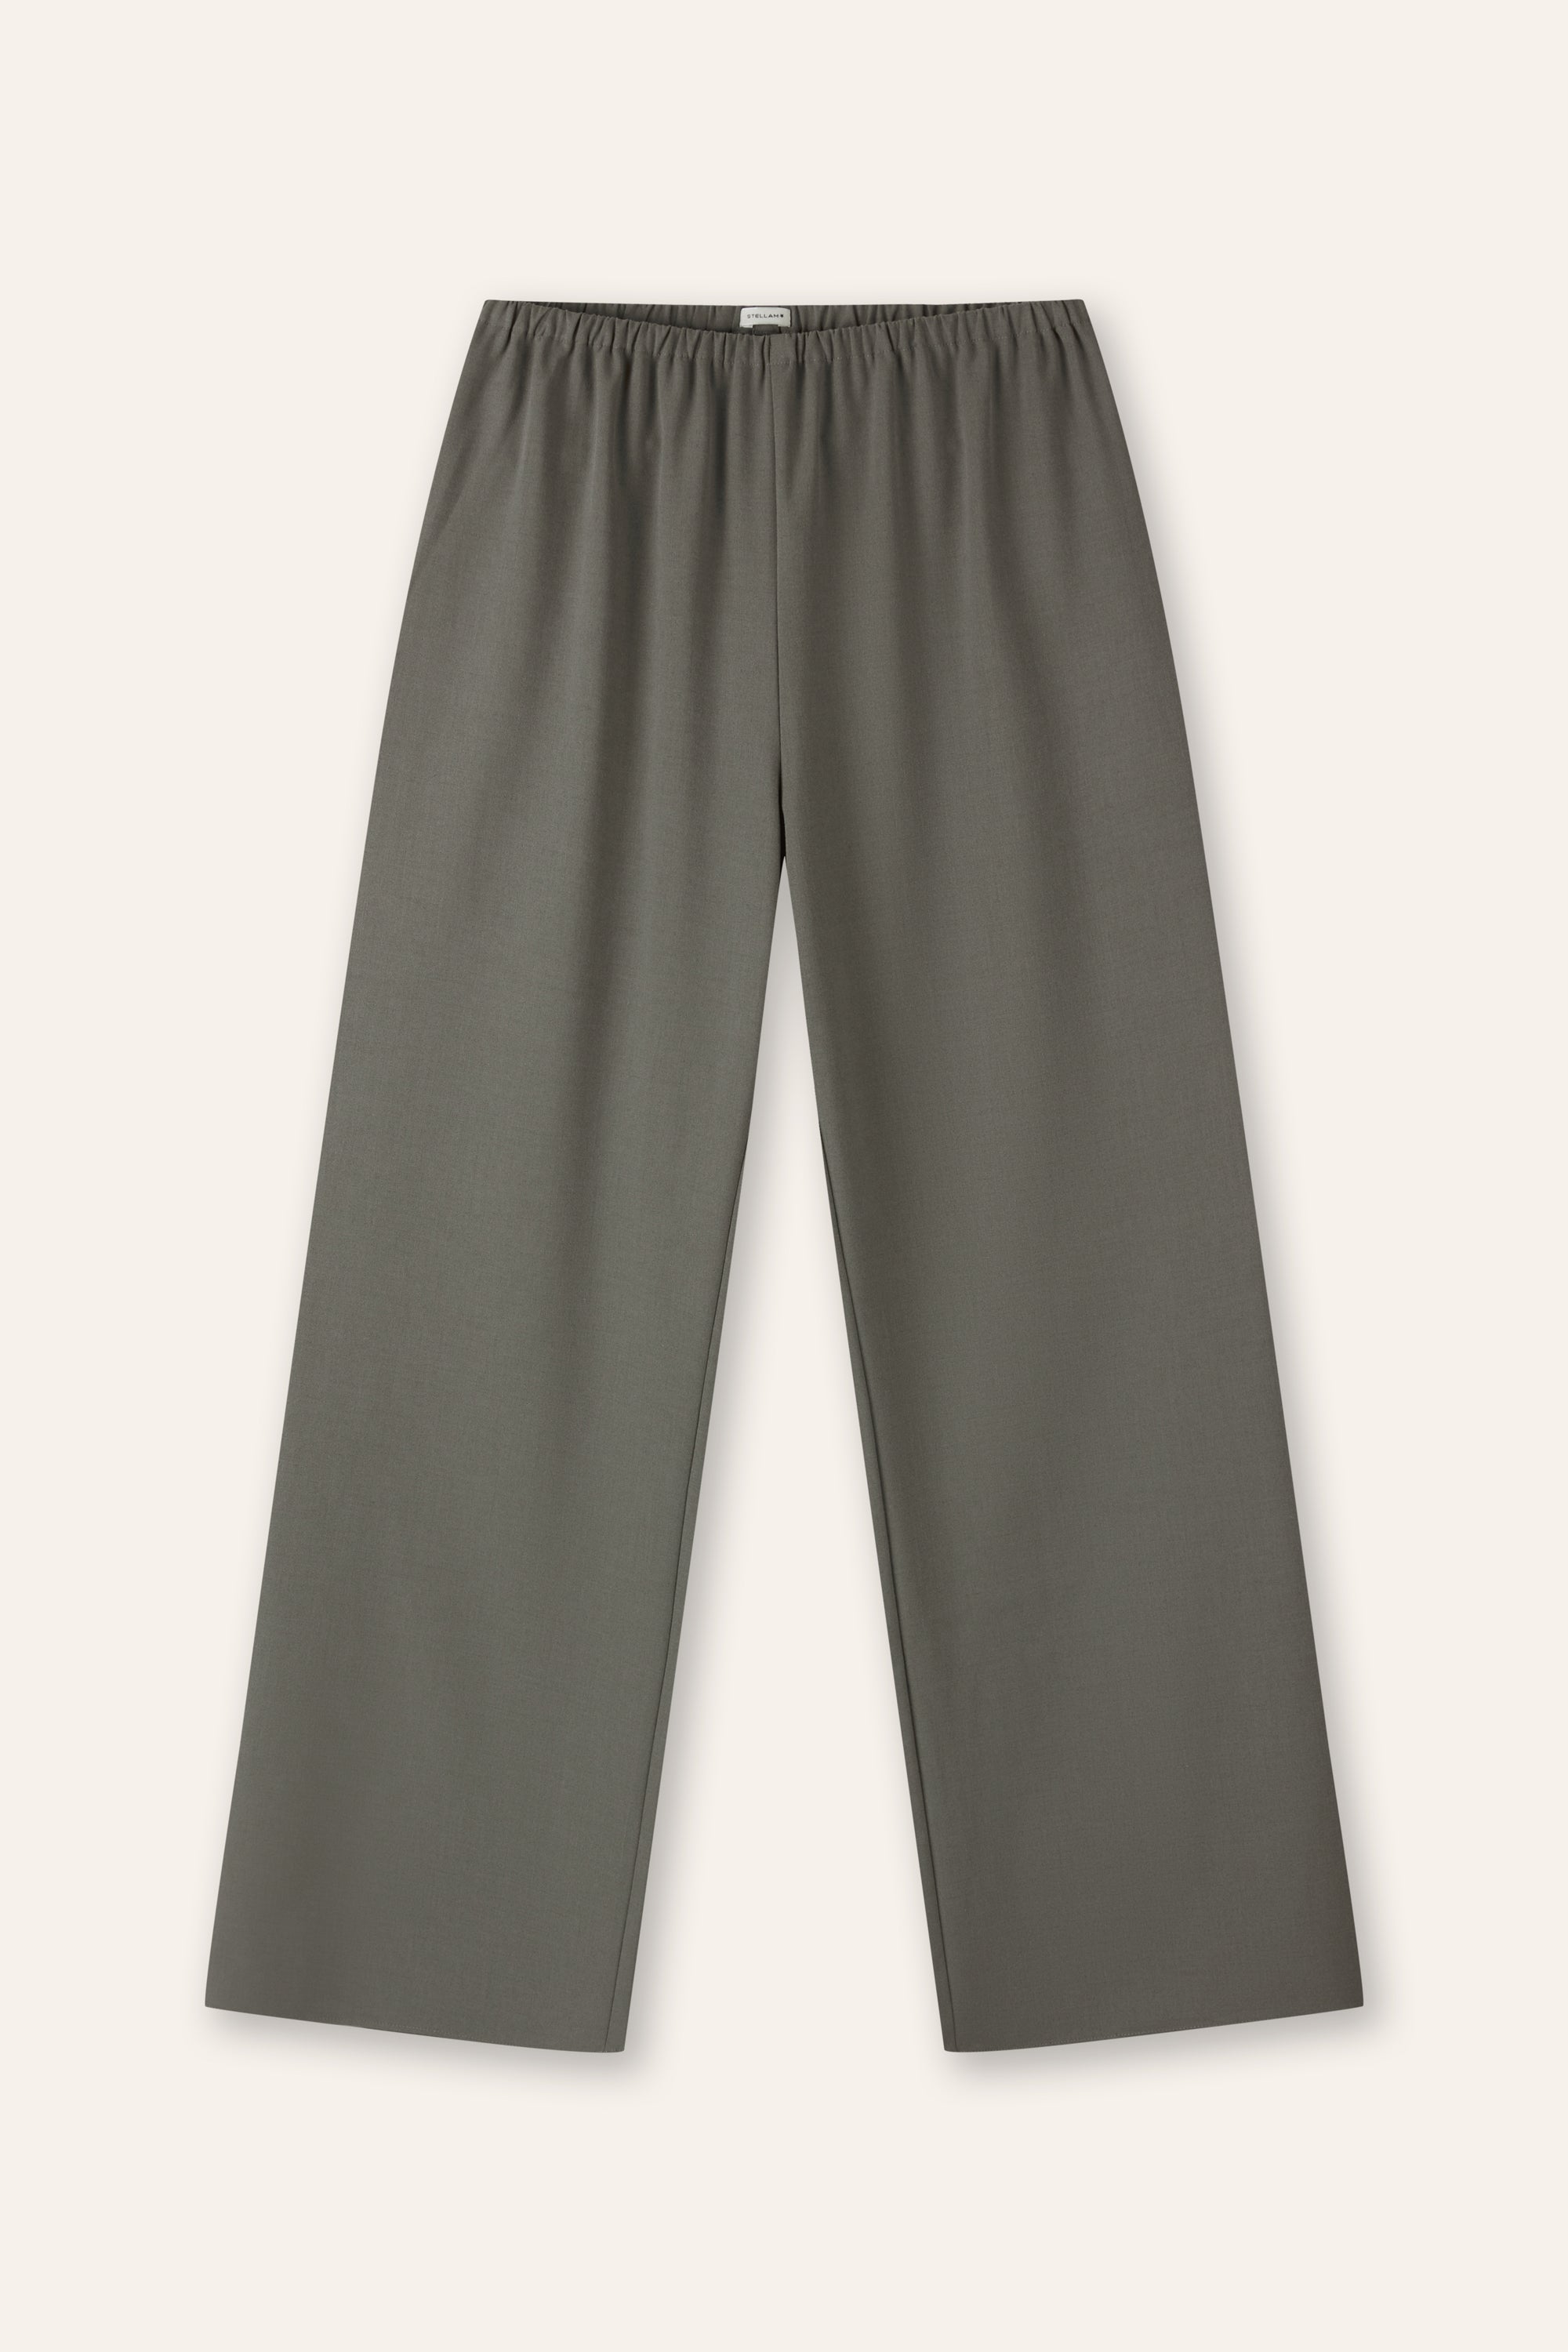 MONDAY wool-blended pants (Grey green)